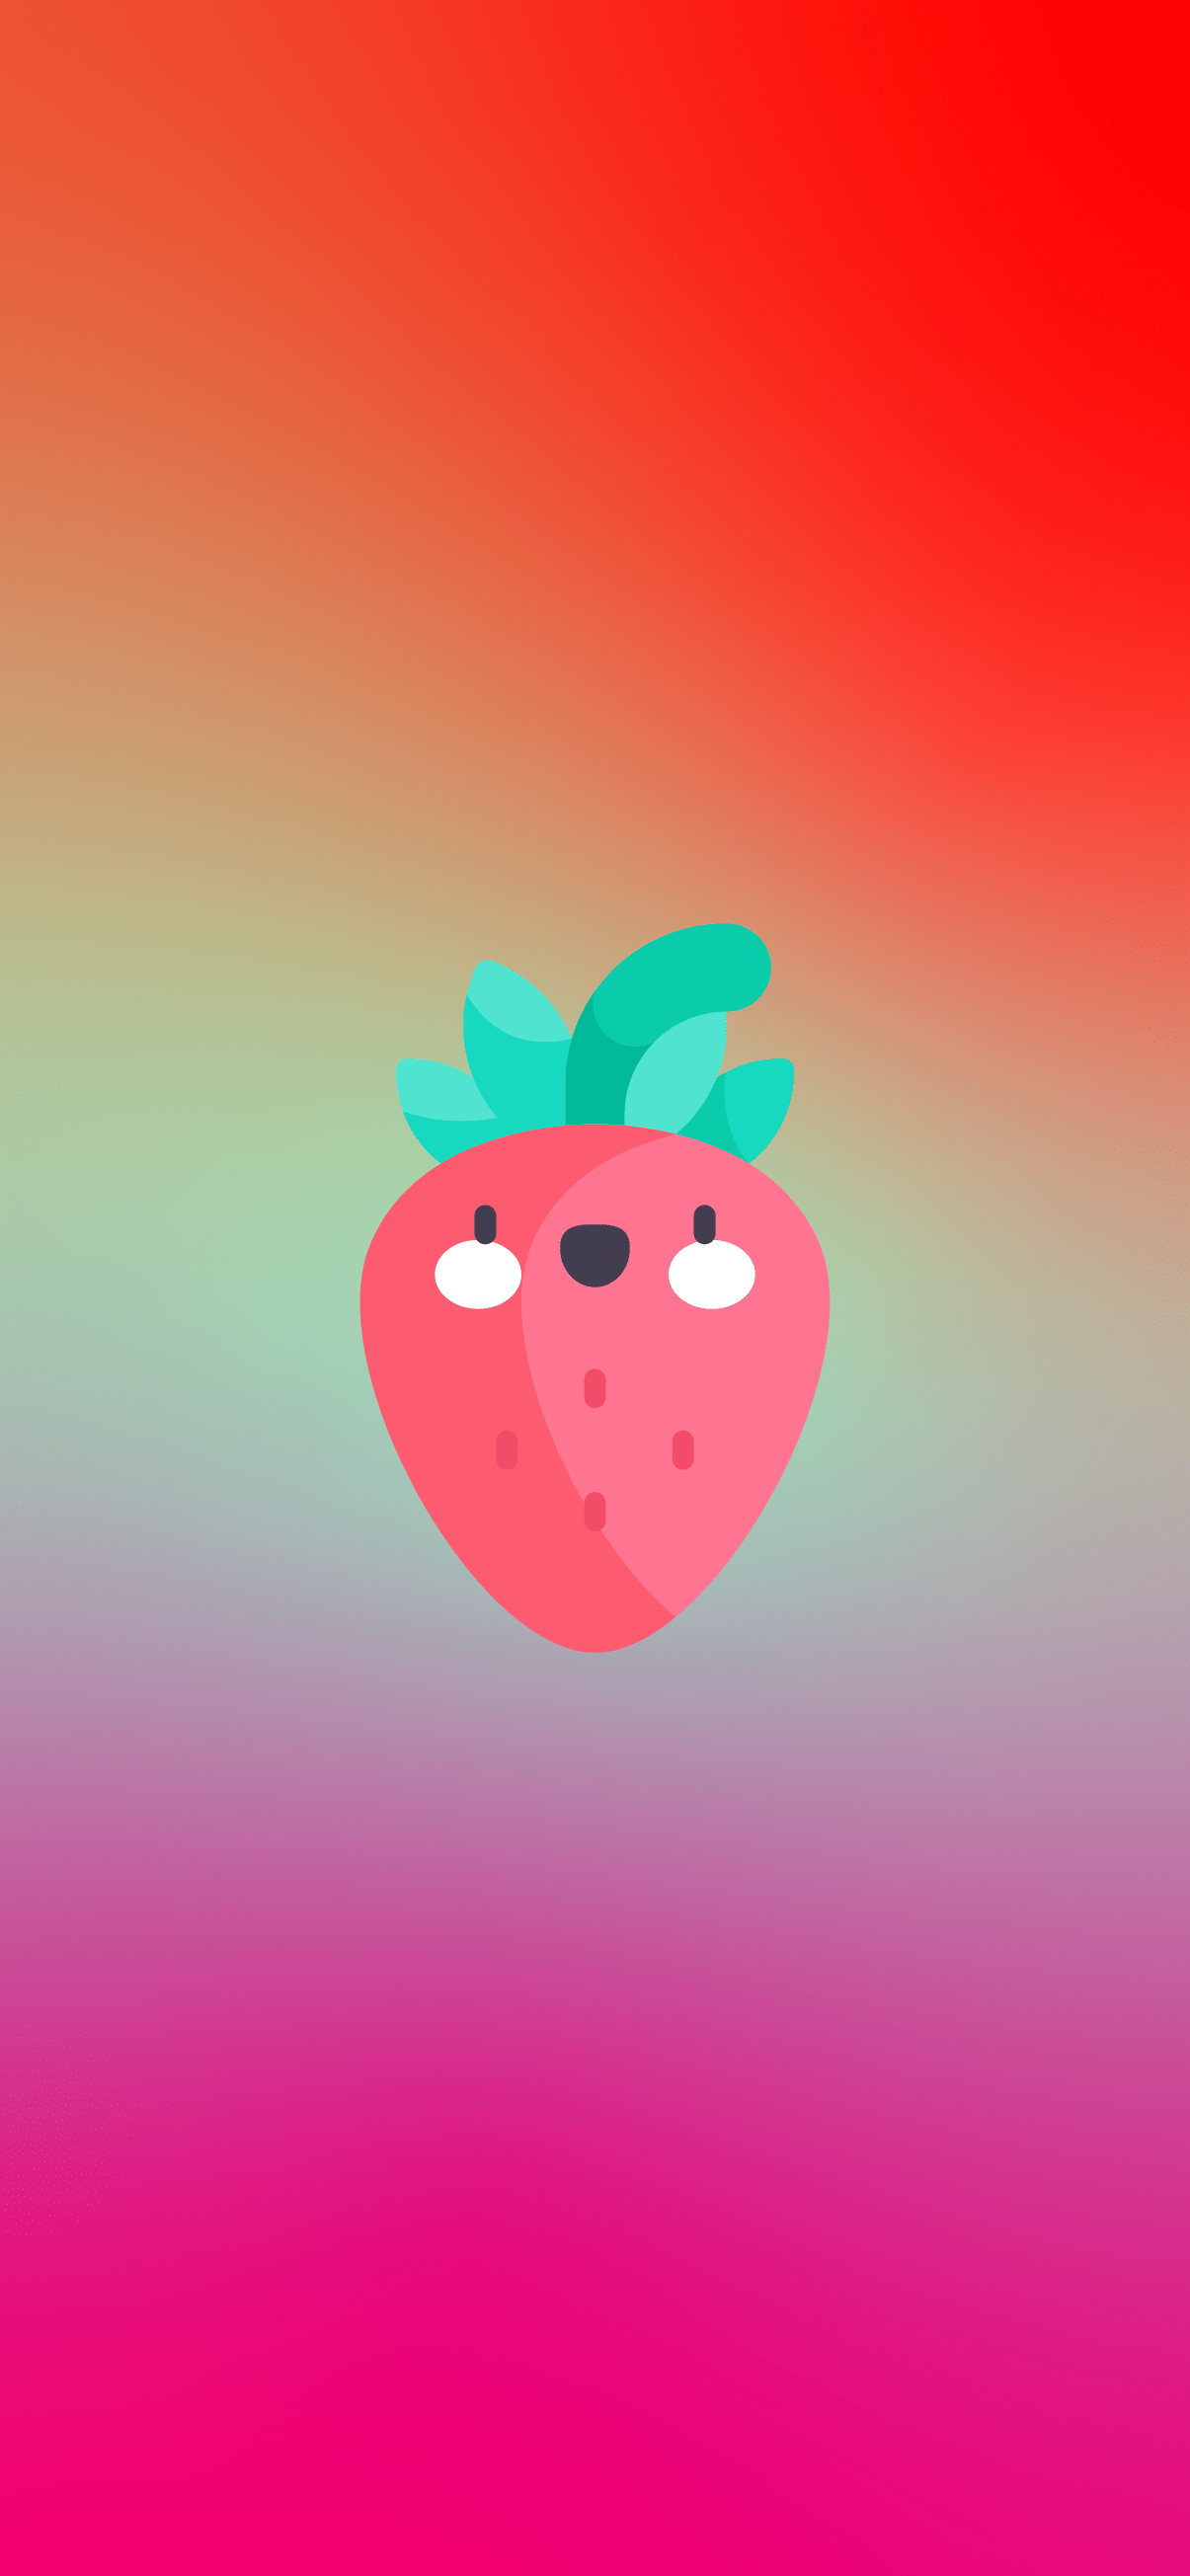 Cute kawaii strawberry phone wallpaper